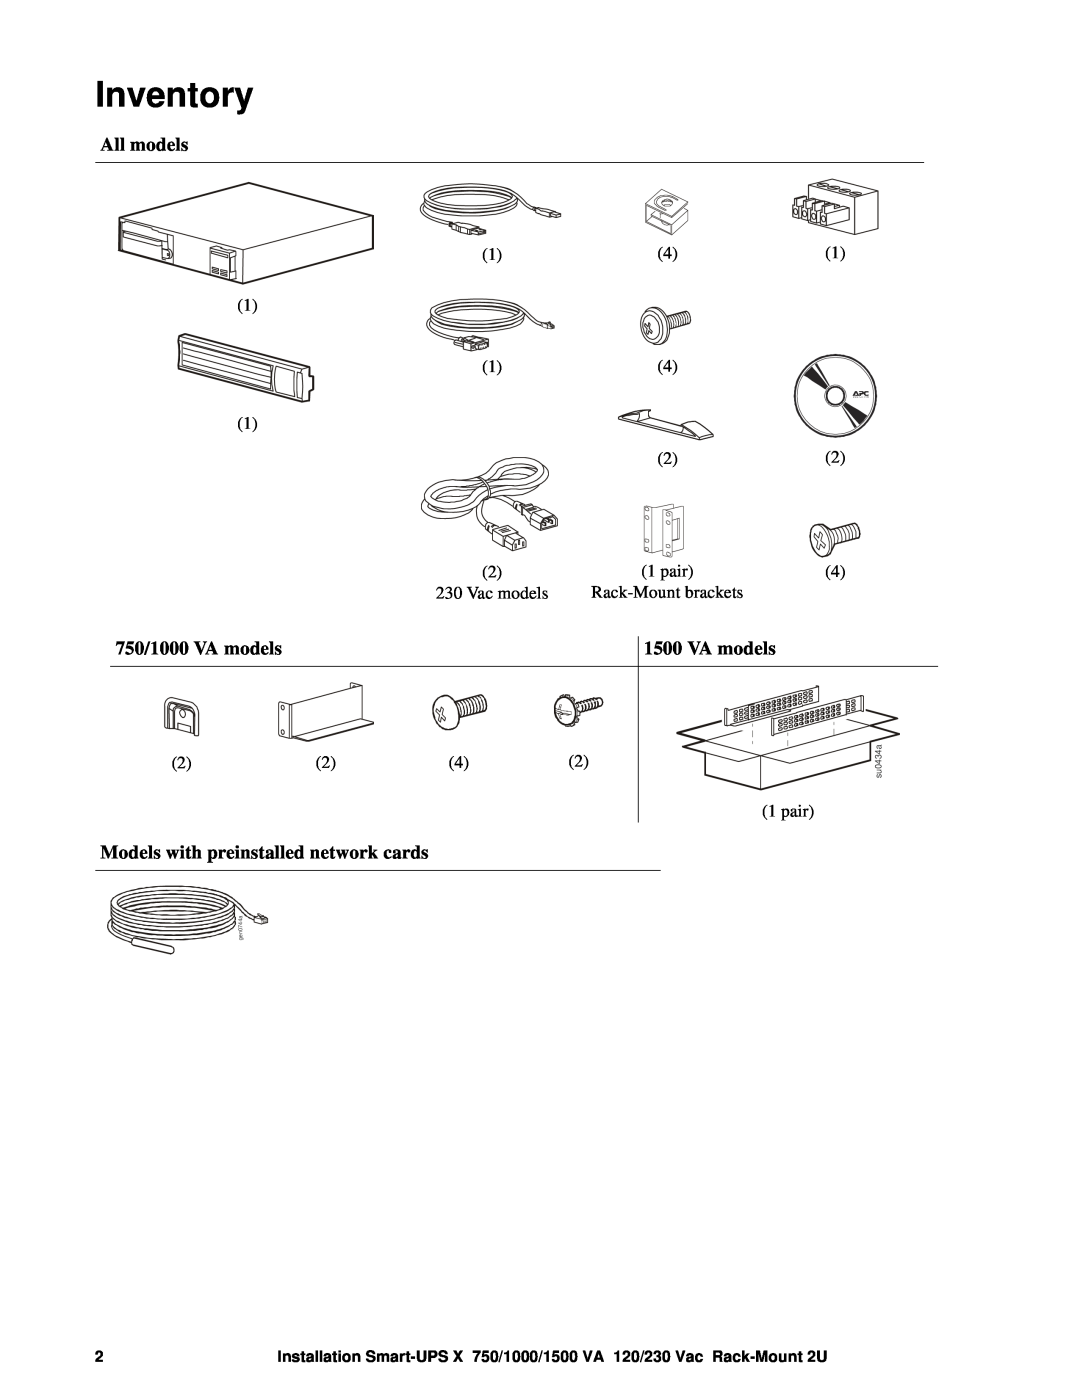 APC SMX750I manual Inventory, All models, 750/1000 VA models, Models with preinstalled network cards, su0434a, gen0744a 